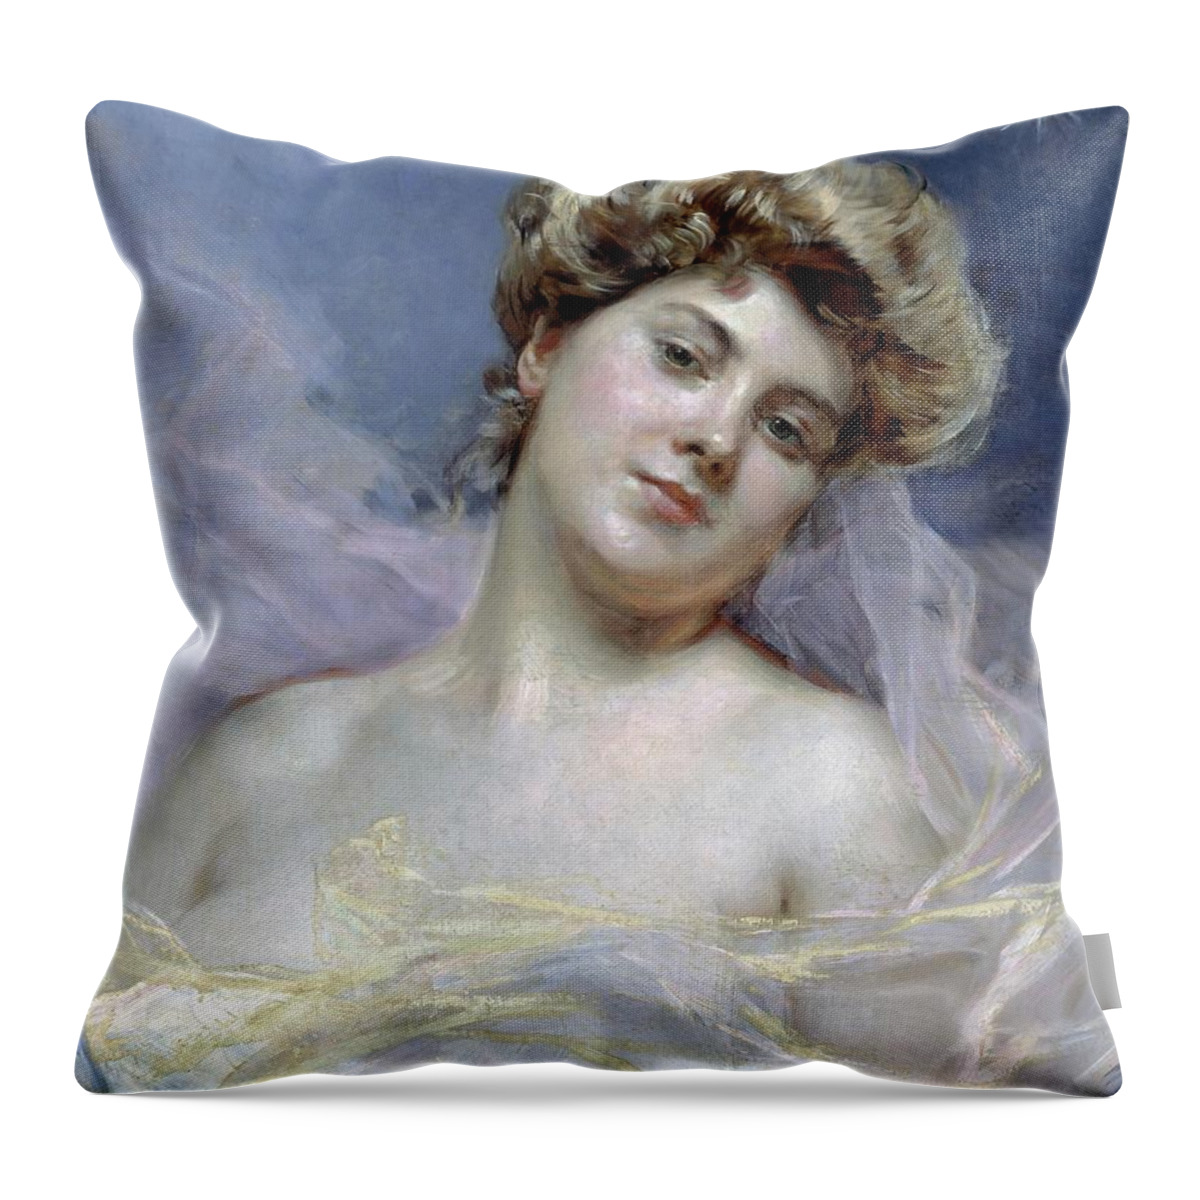 Aurora (mythology) Throw Pillow featuring the painting 'Aurora', Oil on canvas, 65,4 x 54,8 cm. RAIMUNDO DE MADRAZO . by Raimundo de Madrazo y Garreta -1841-1920-